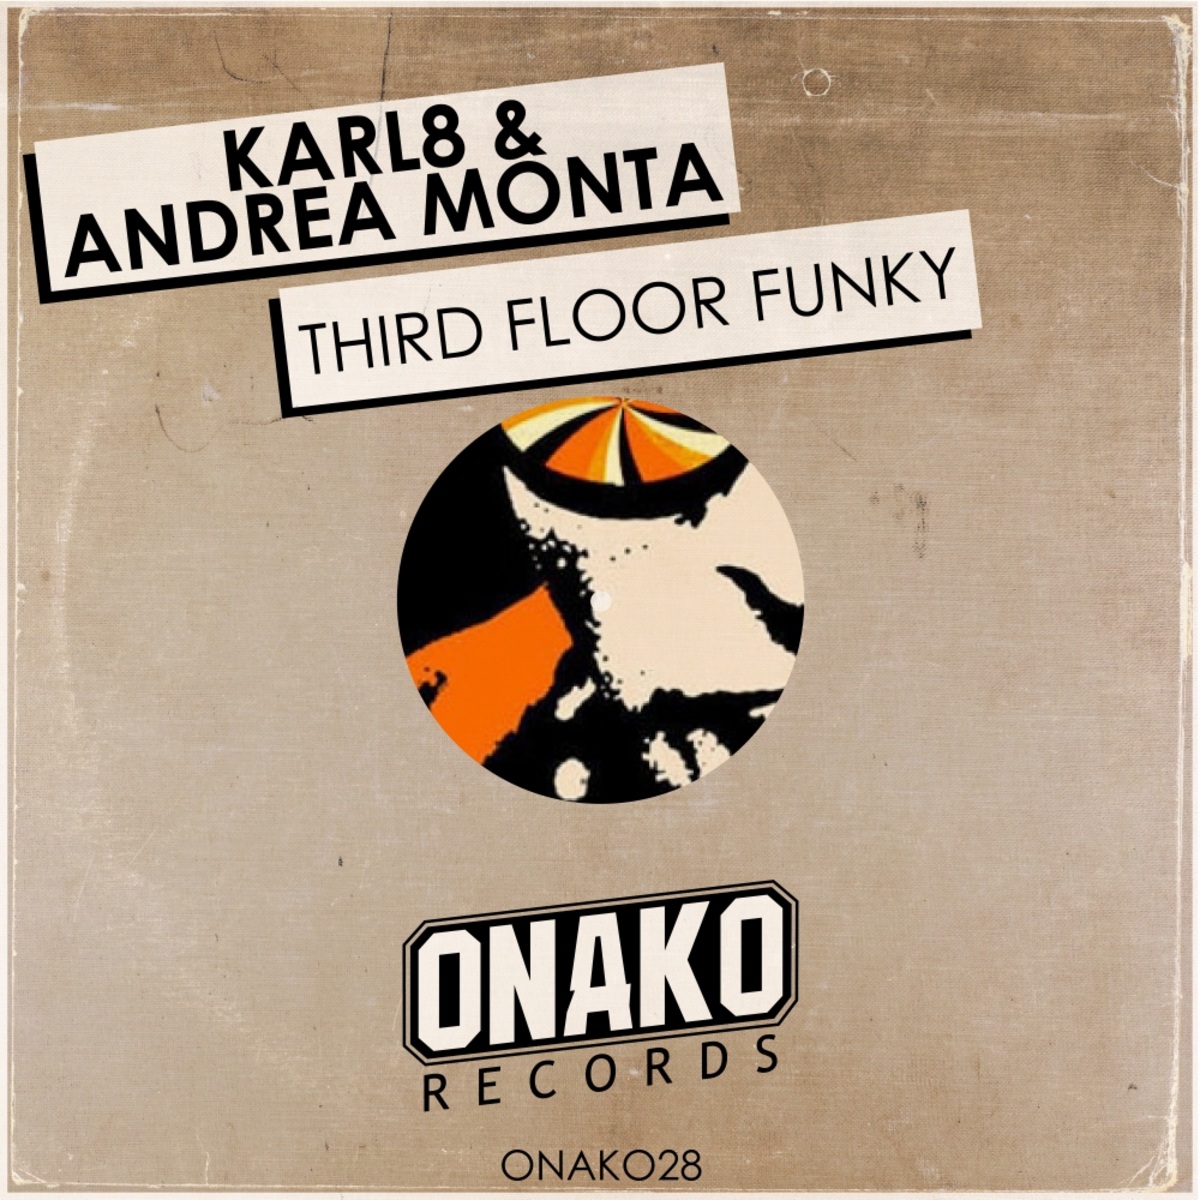 Karl8 & Andrea Monta - Third Floor Funky / Onako Records